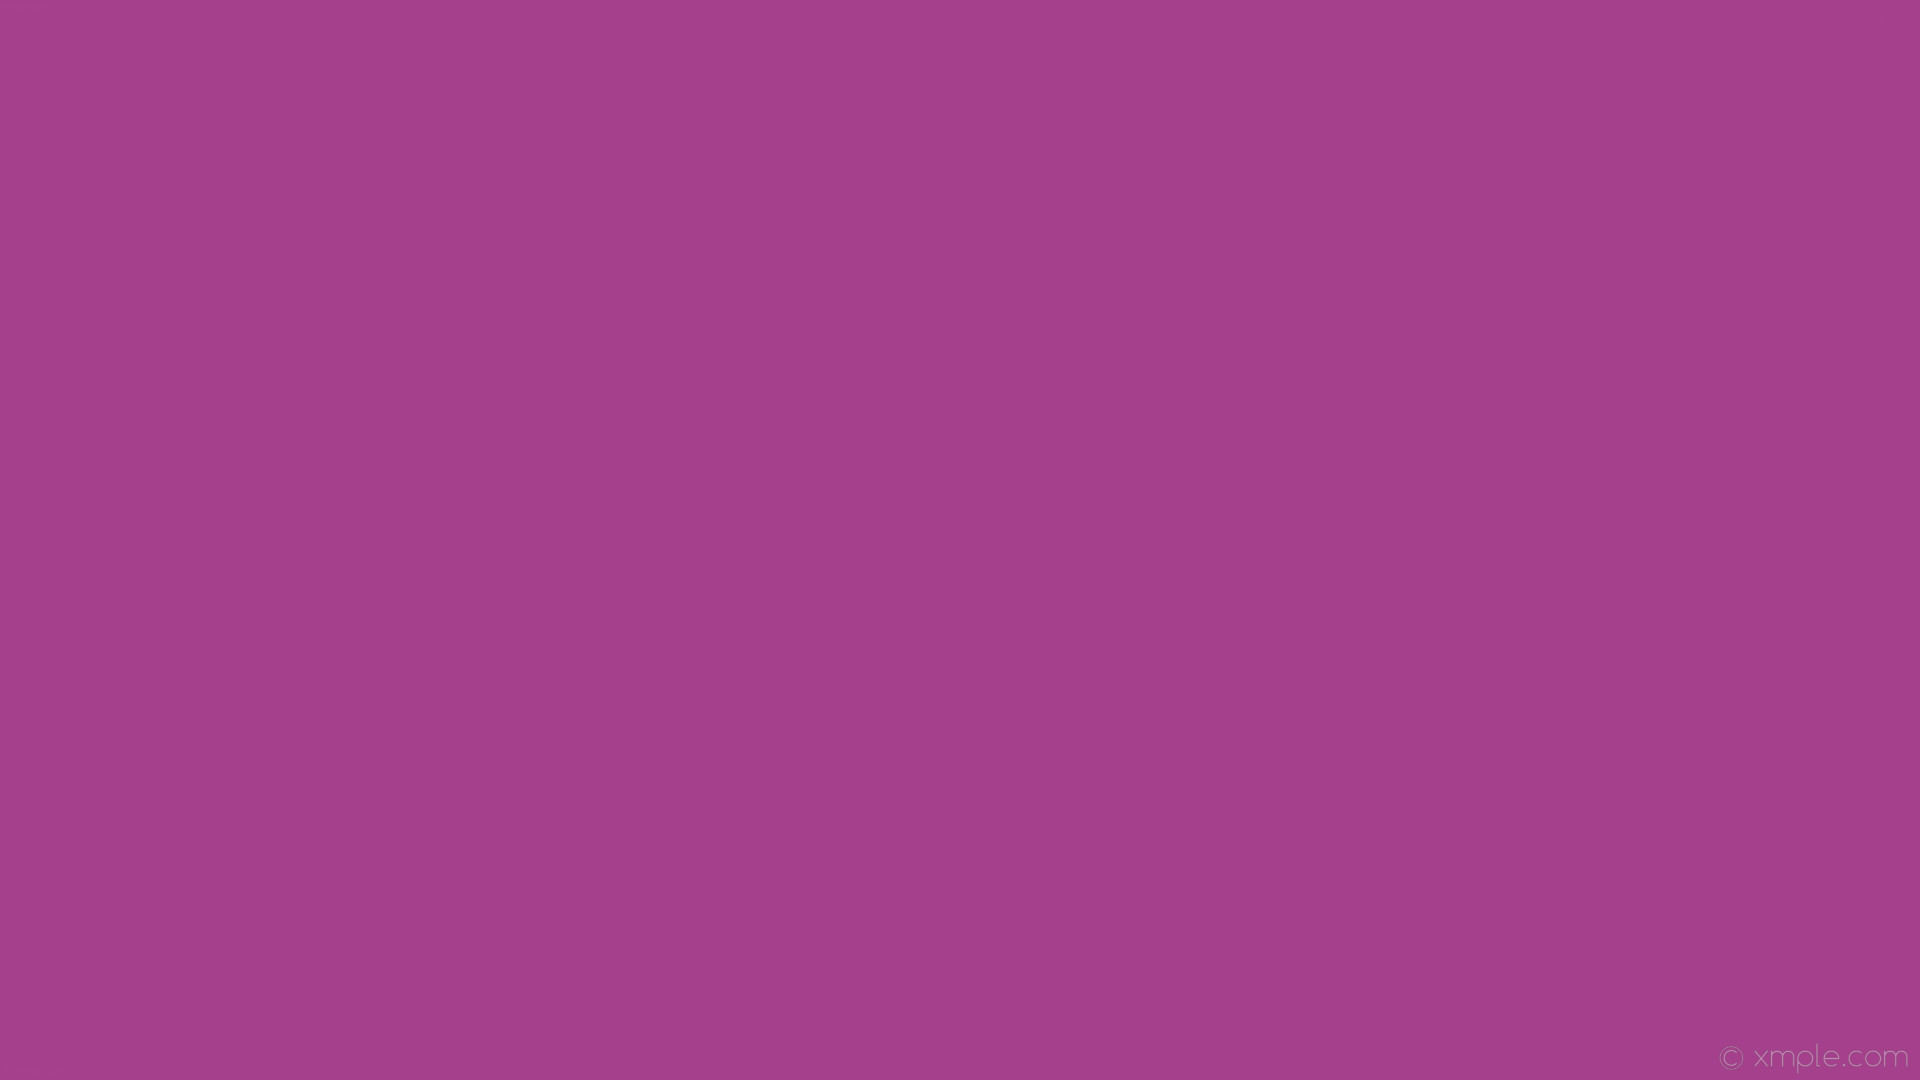 Wallpaper Plain Solid Color Single One Colour Magenta - Purple Solid Colour  Hd - 1920x1080 Wallpaper 